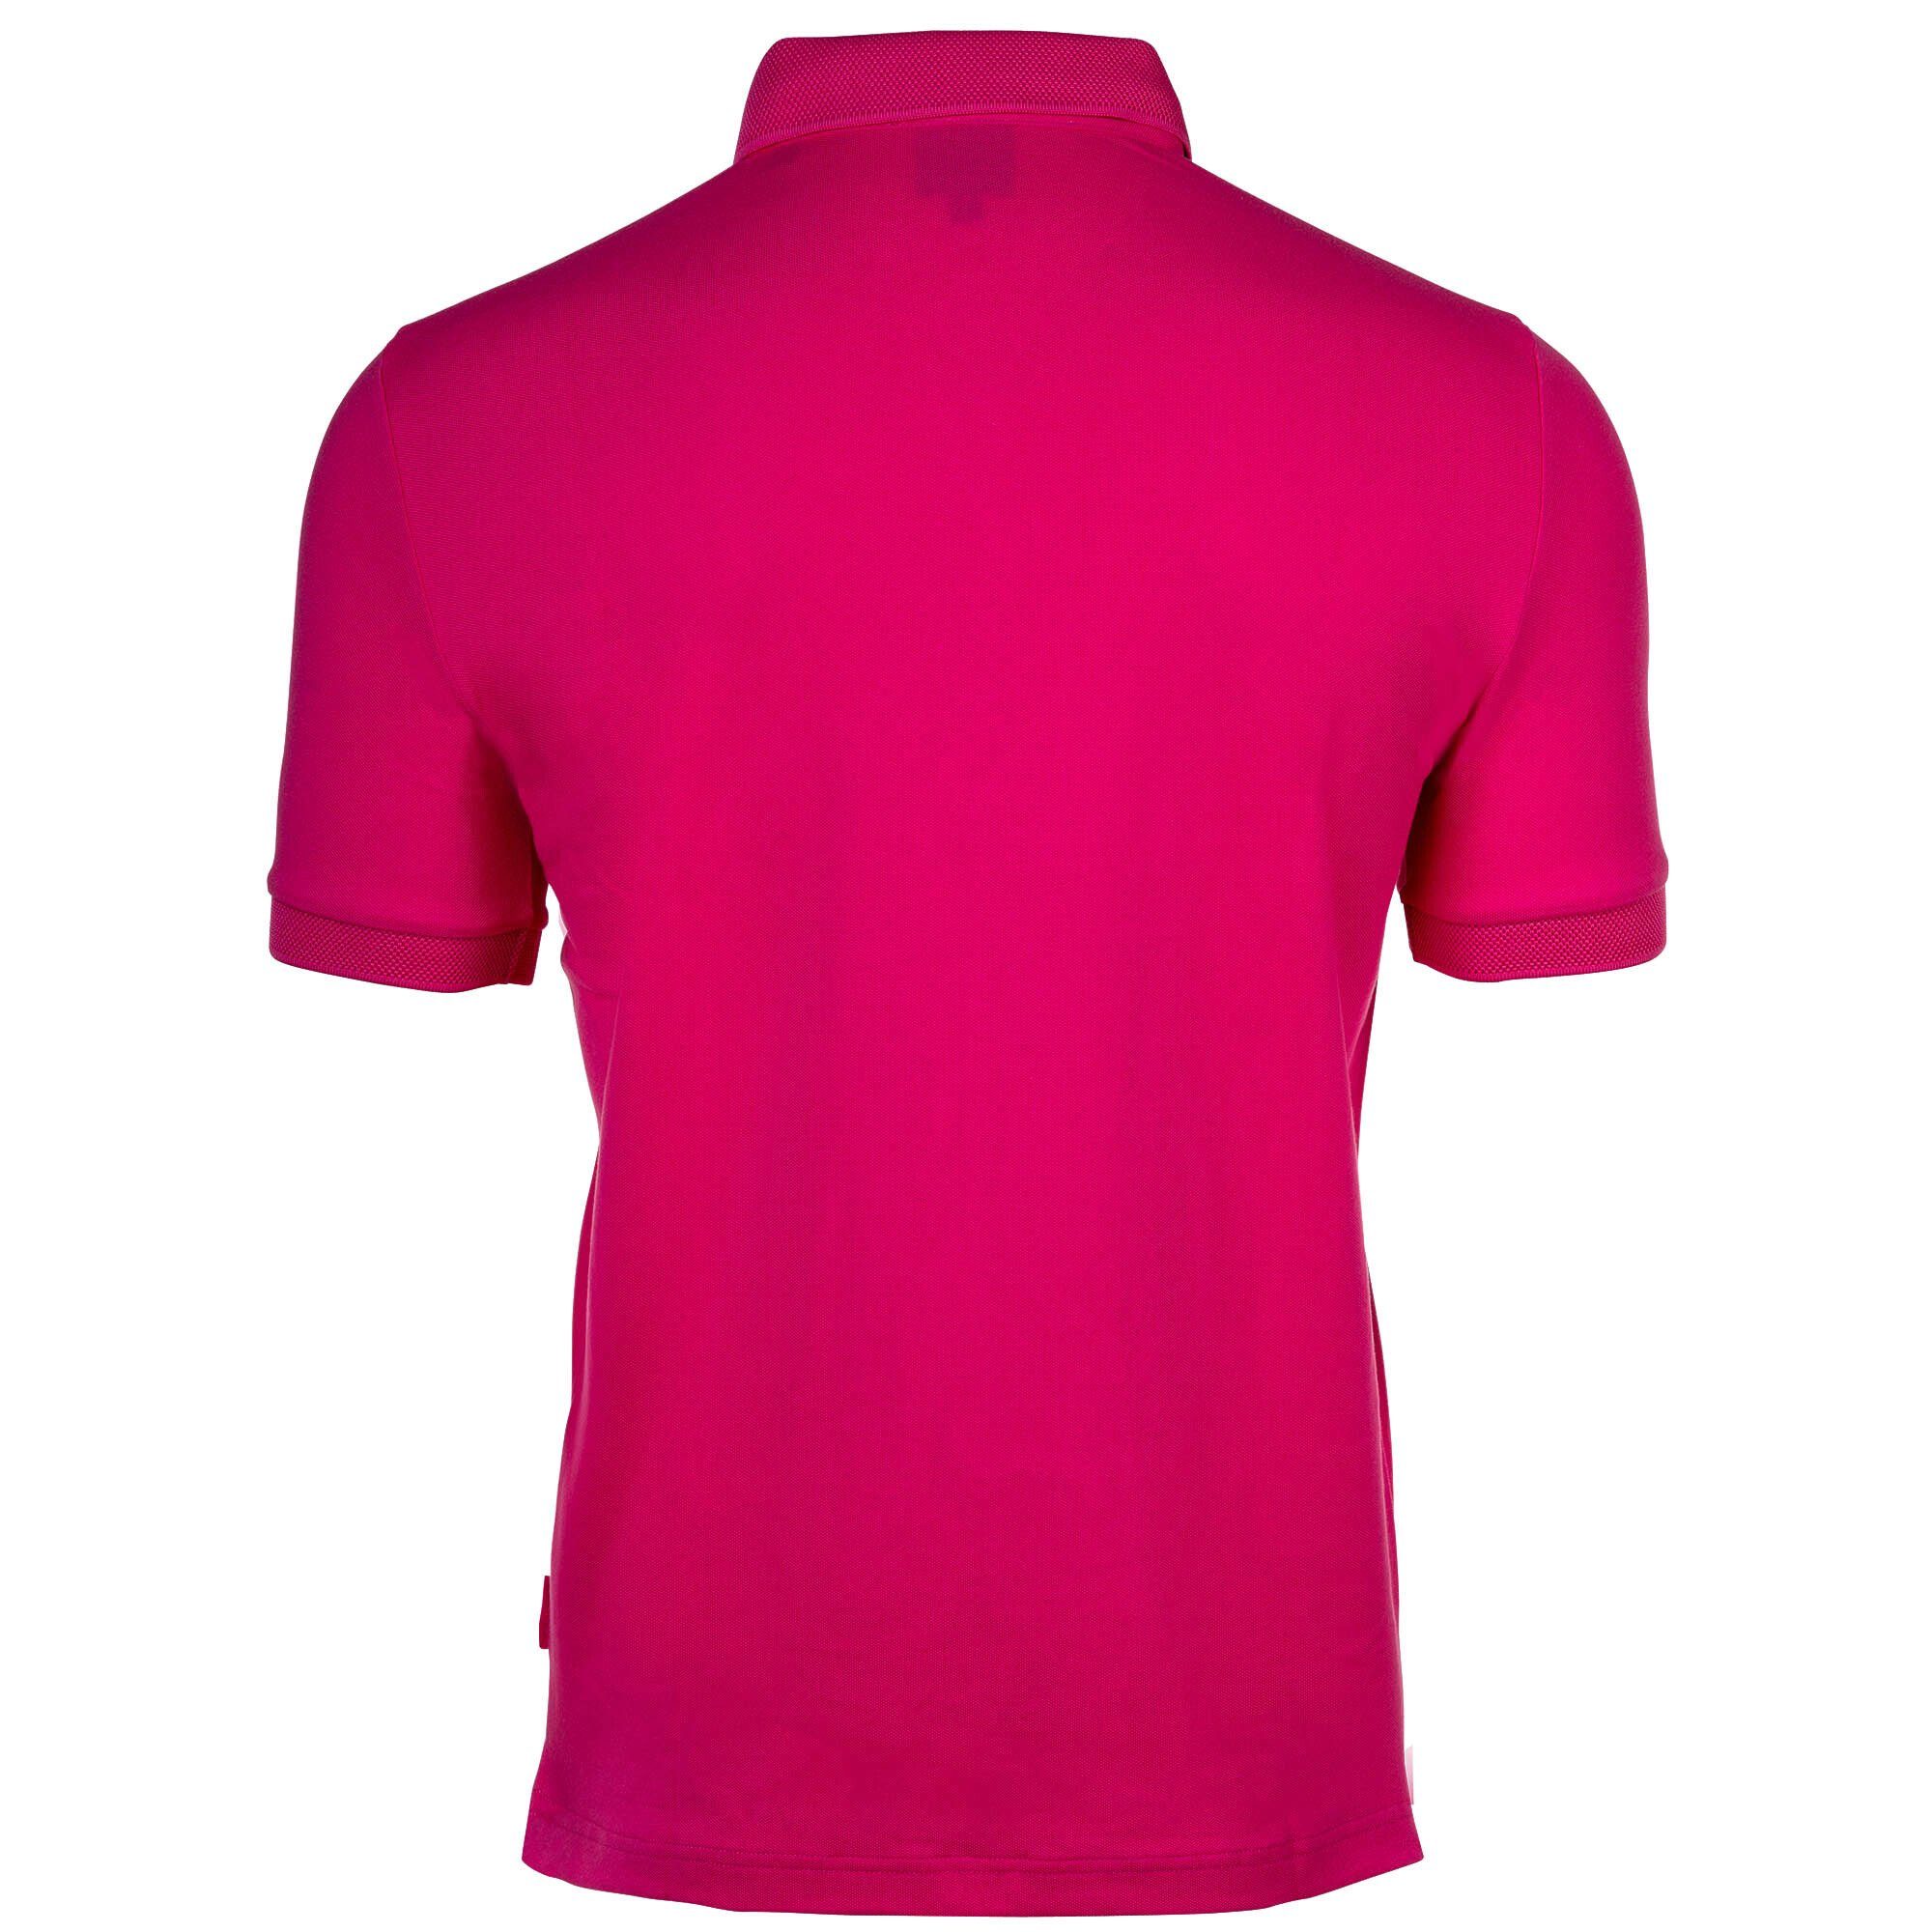 ARMANI EXCHANGE Poloshirt Herren Poloshirt - Cotton einfarbig, Pink Slim fit